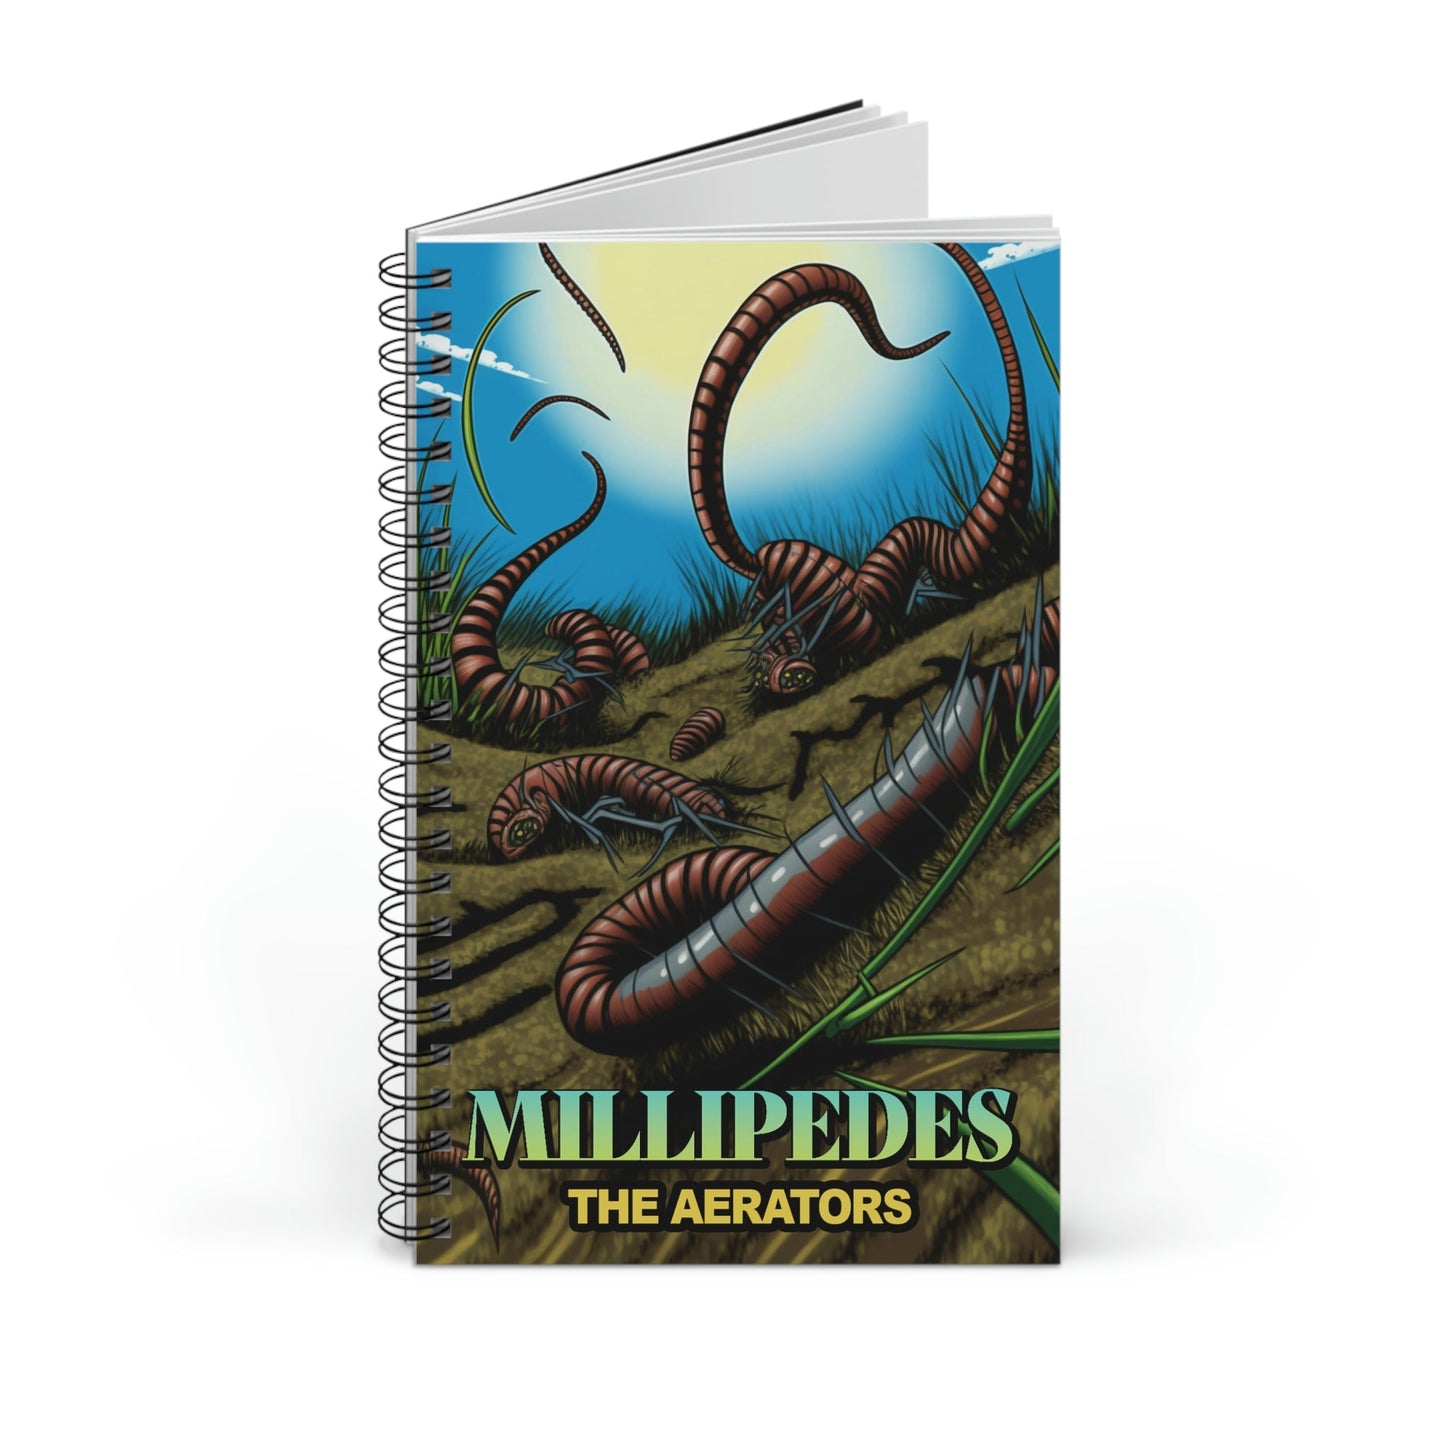 Millipede Graphic Novel Cover Spiral Journal Notebook Sketch Book